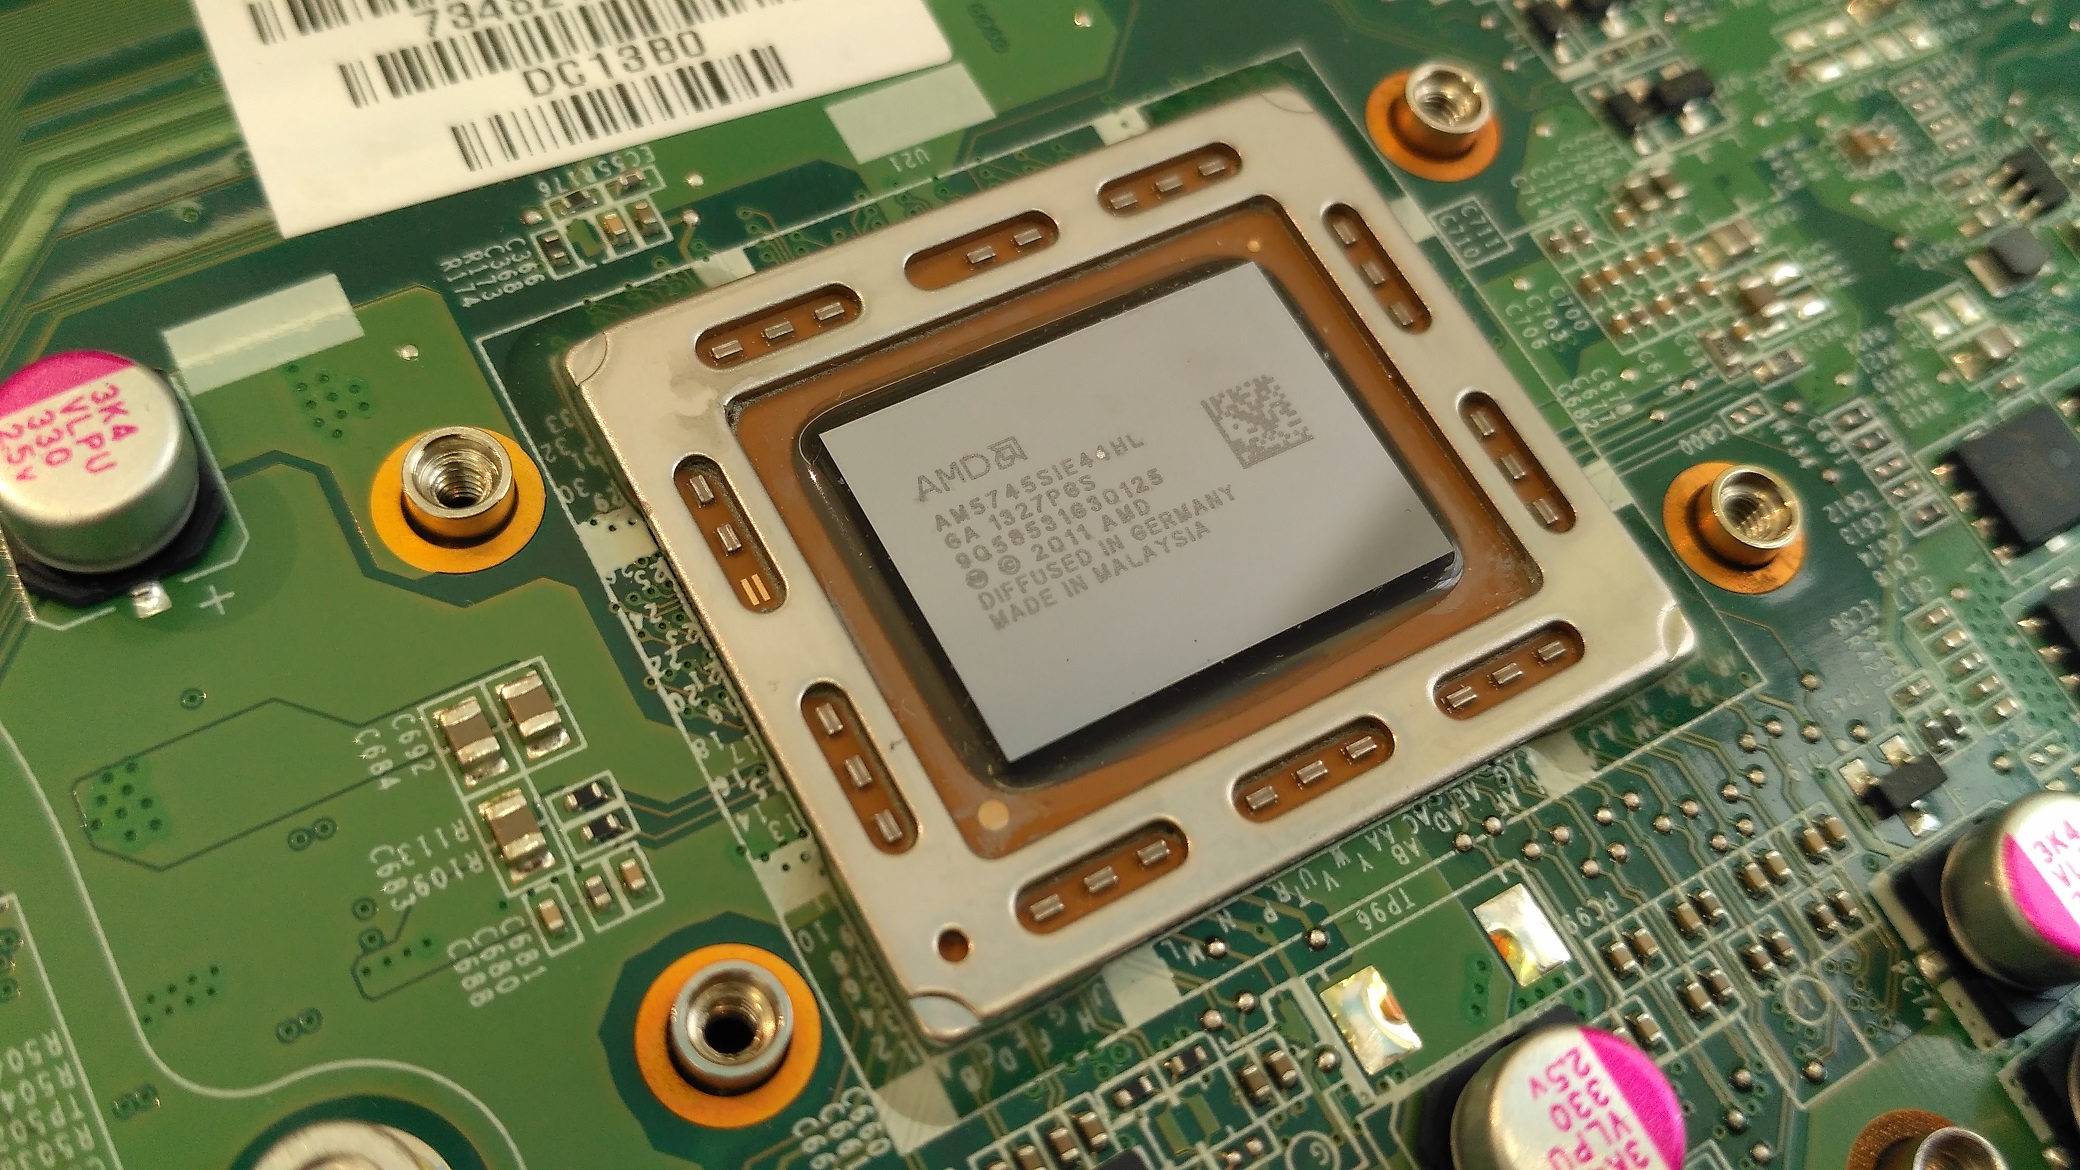 procesor-AMD-A10